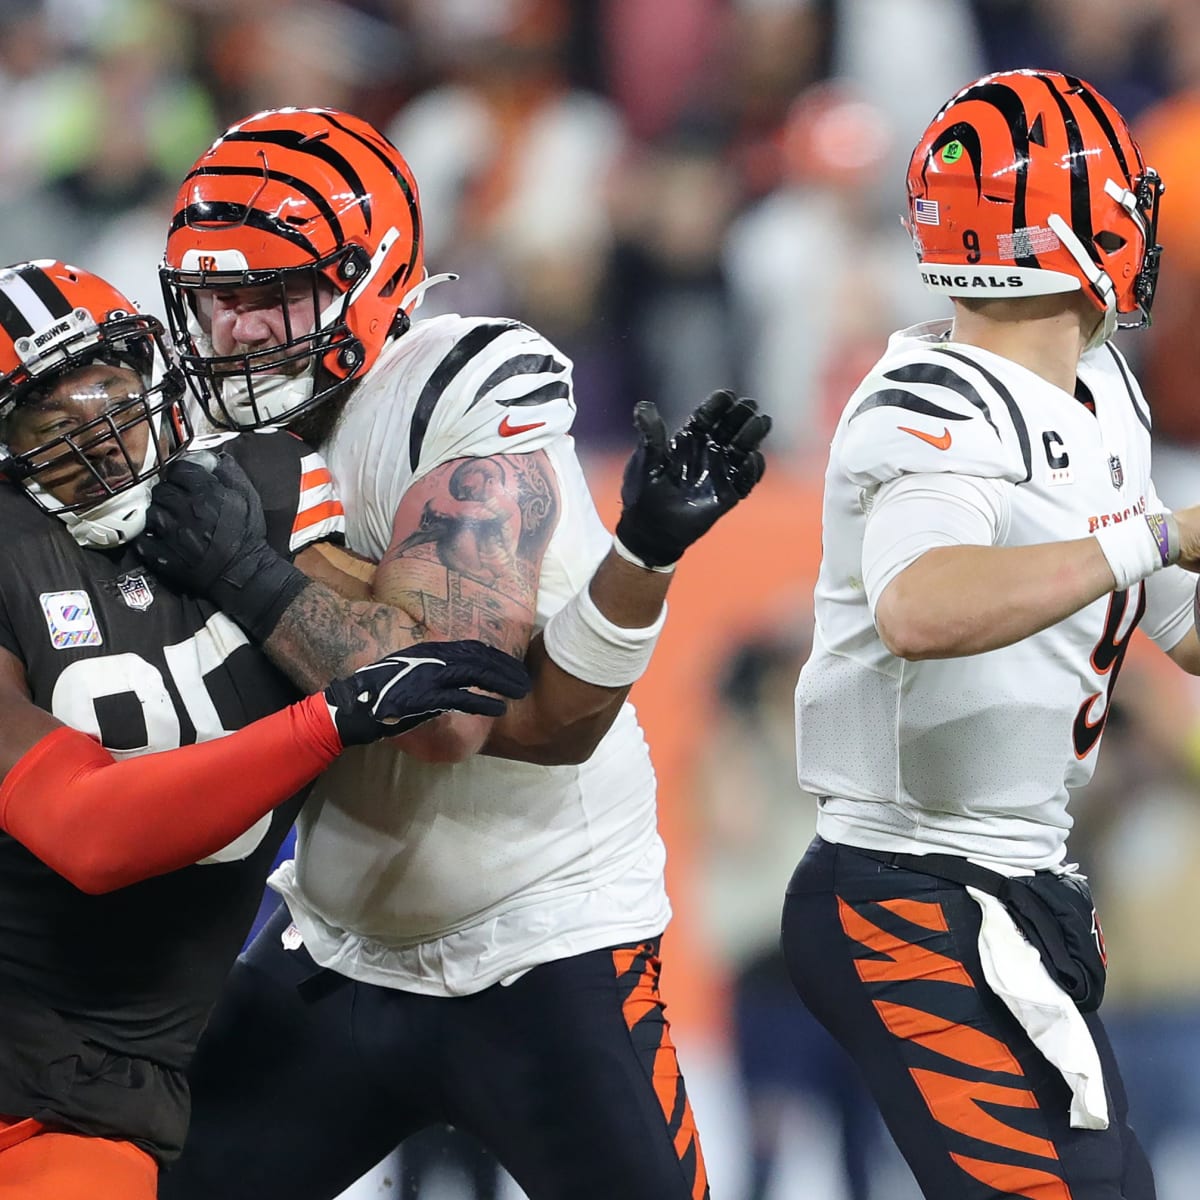 Bengals vs Browns live stream: How to watch NFL week 1 online